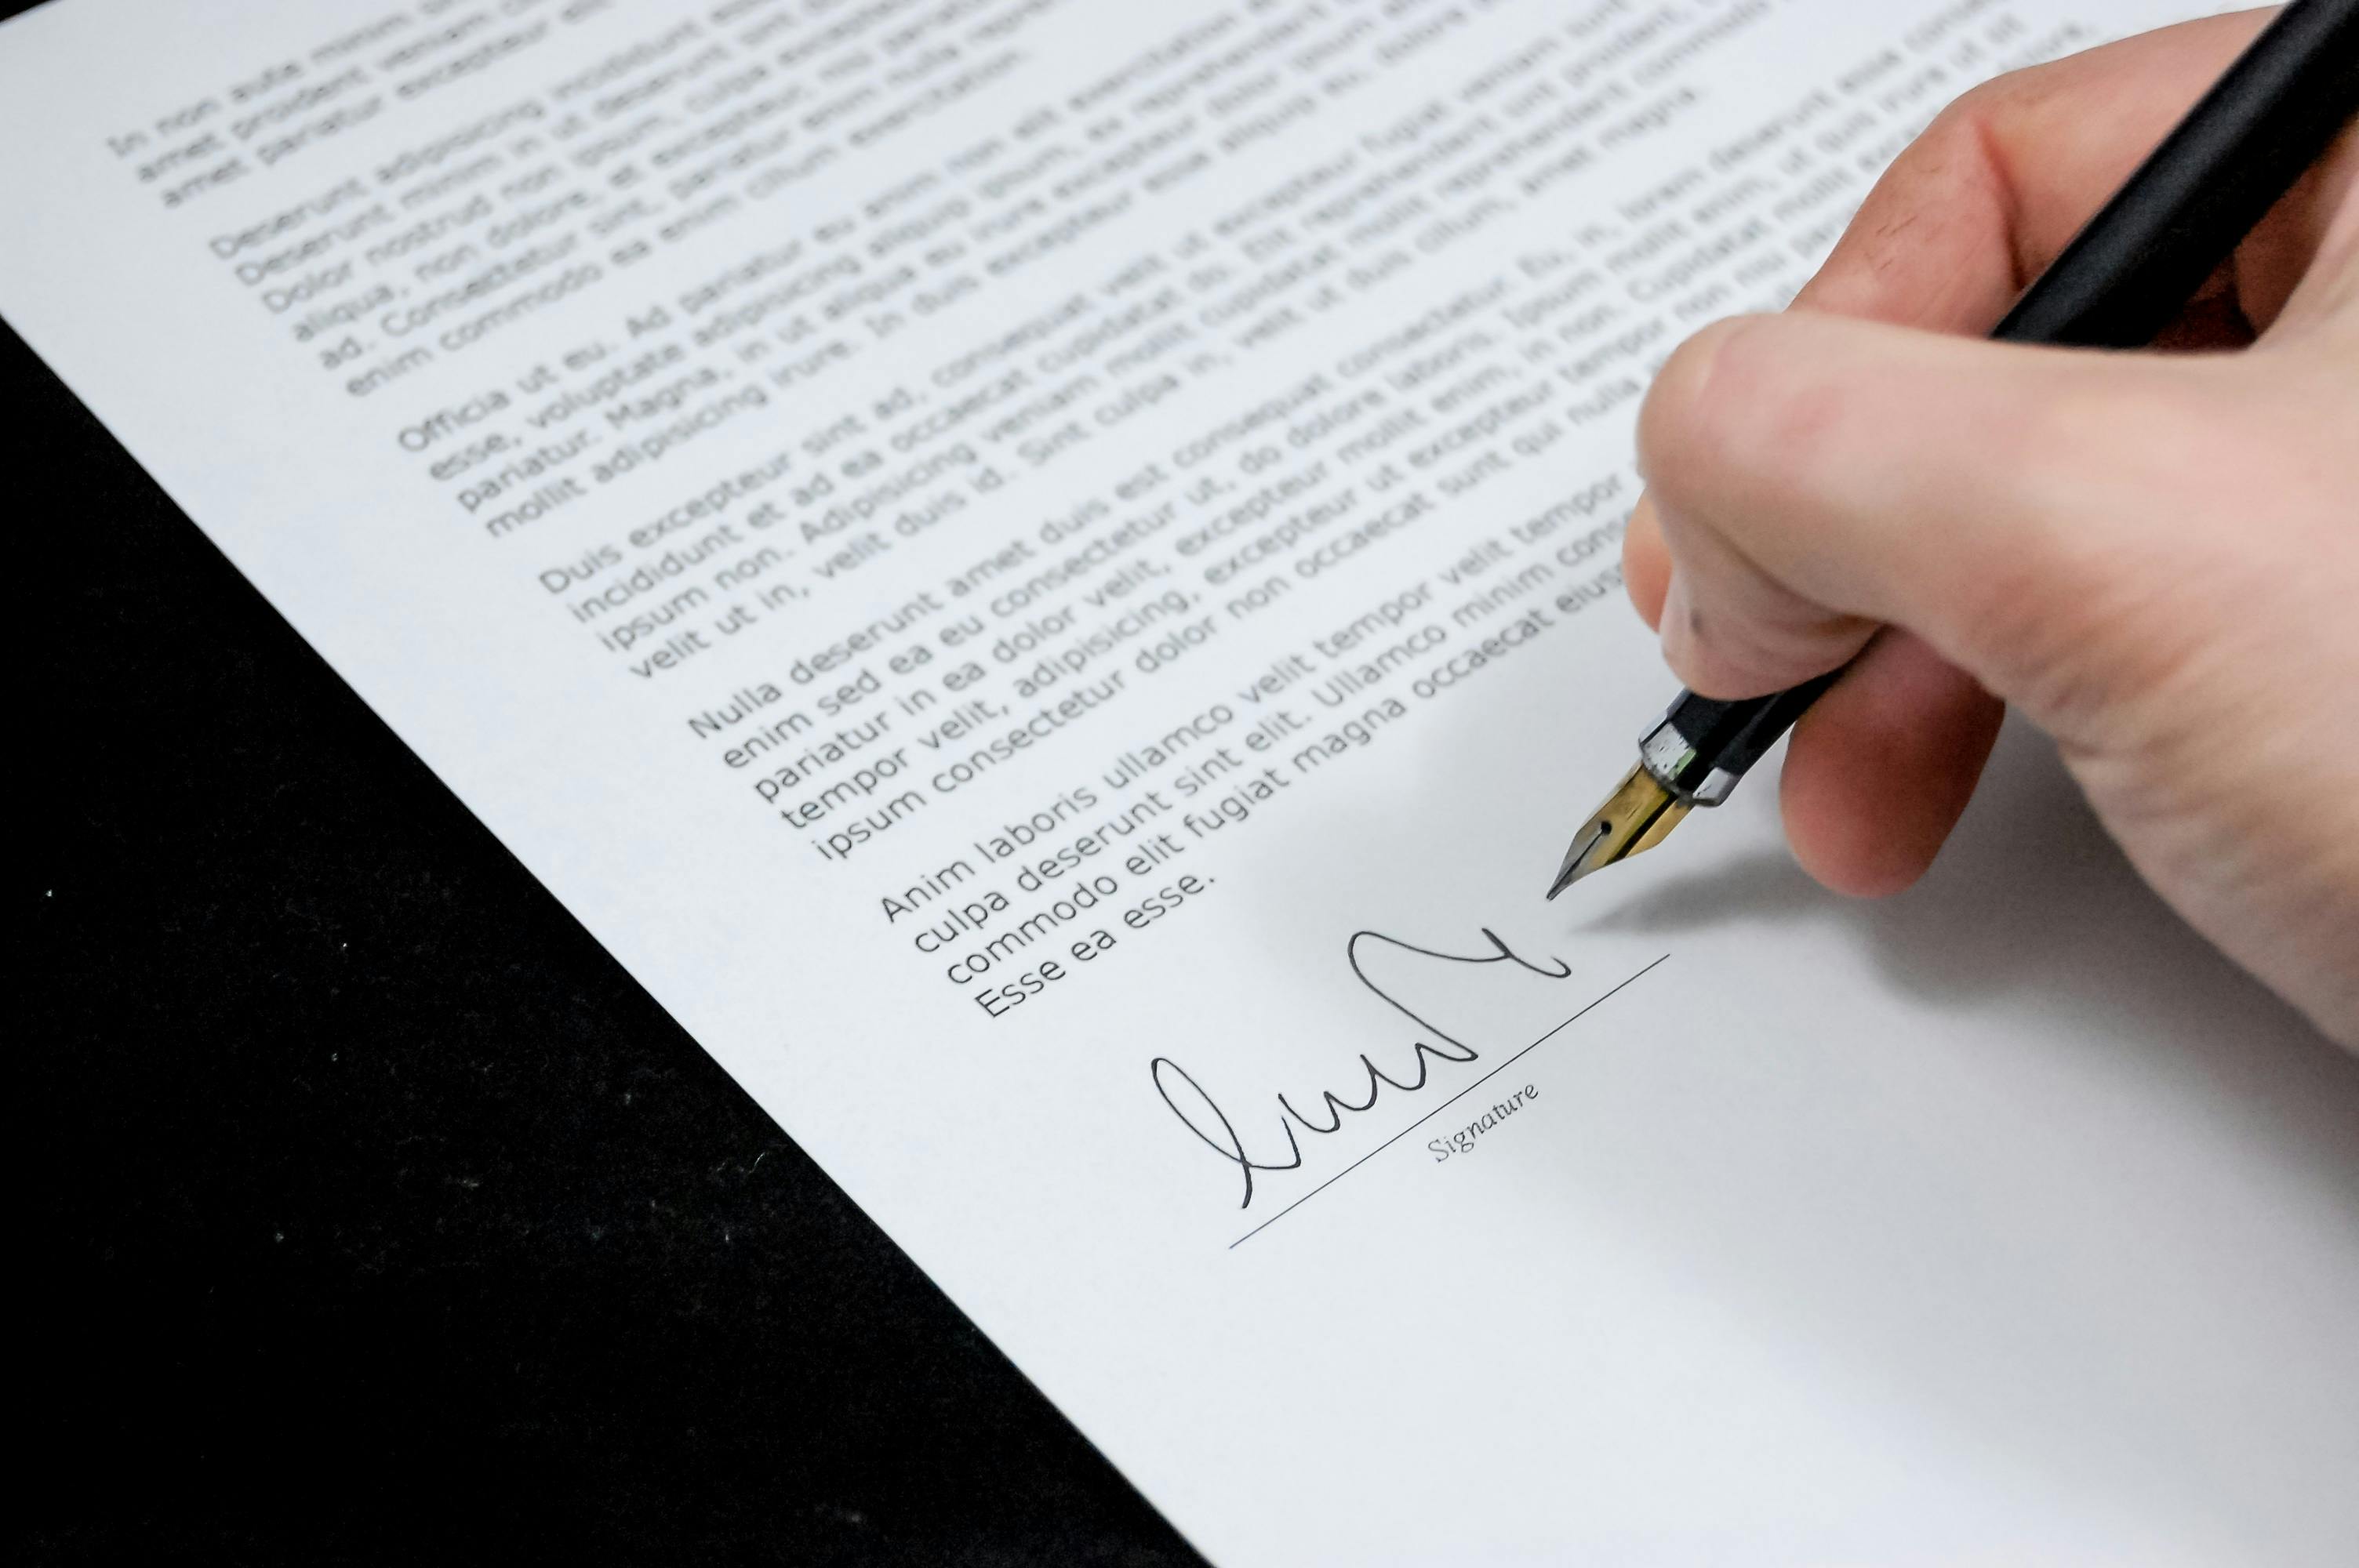 Una persona firmando un documento | Foto: Pexels